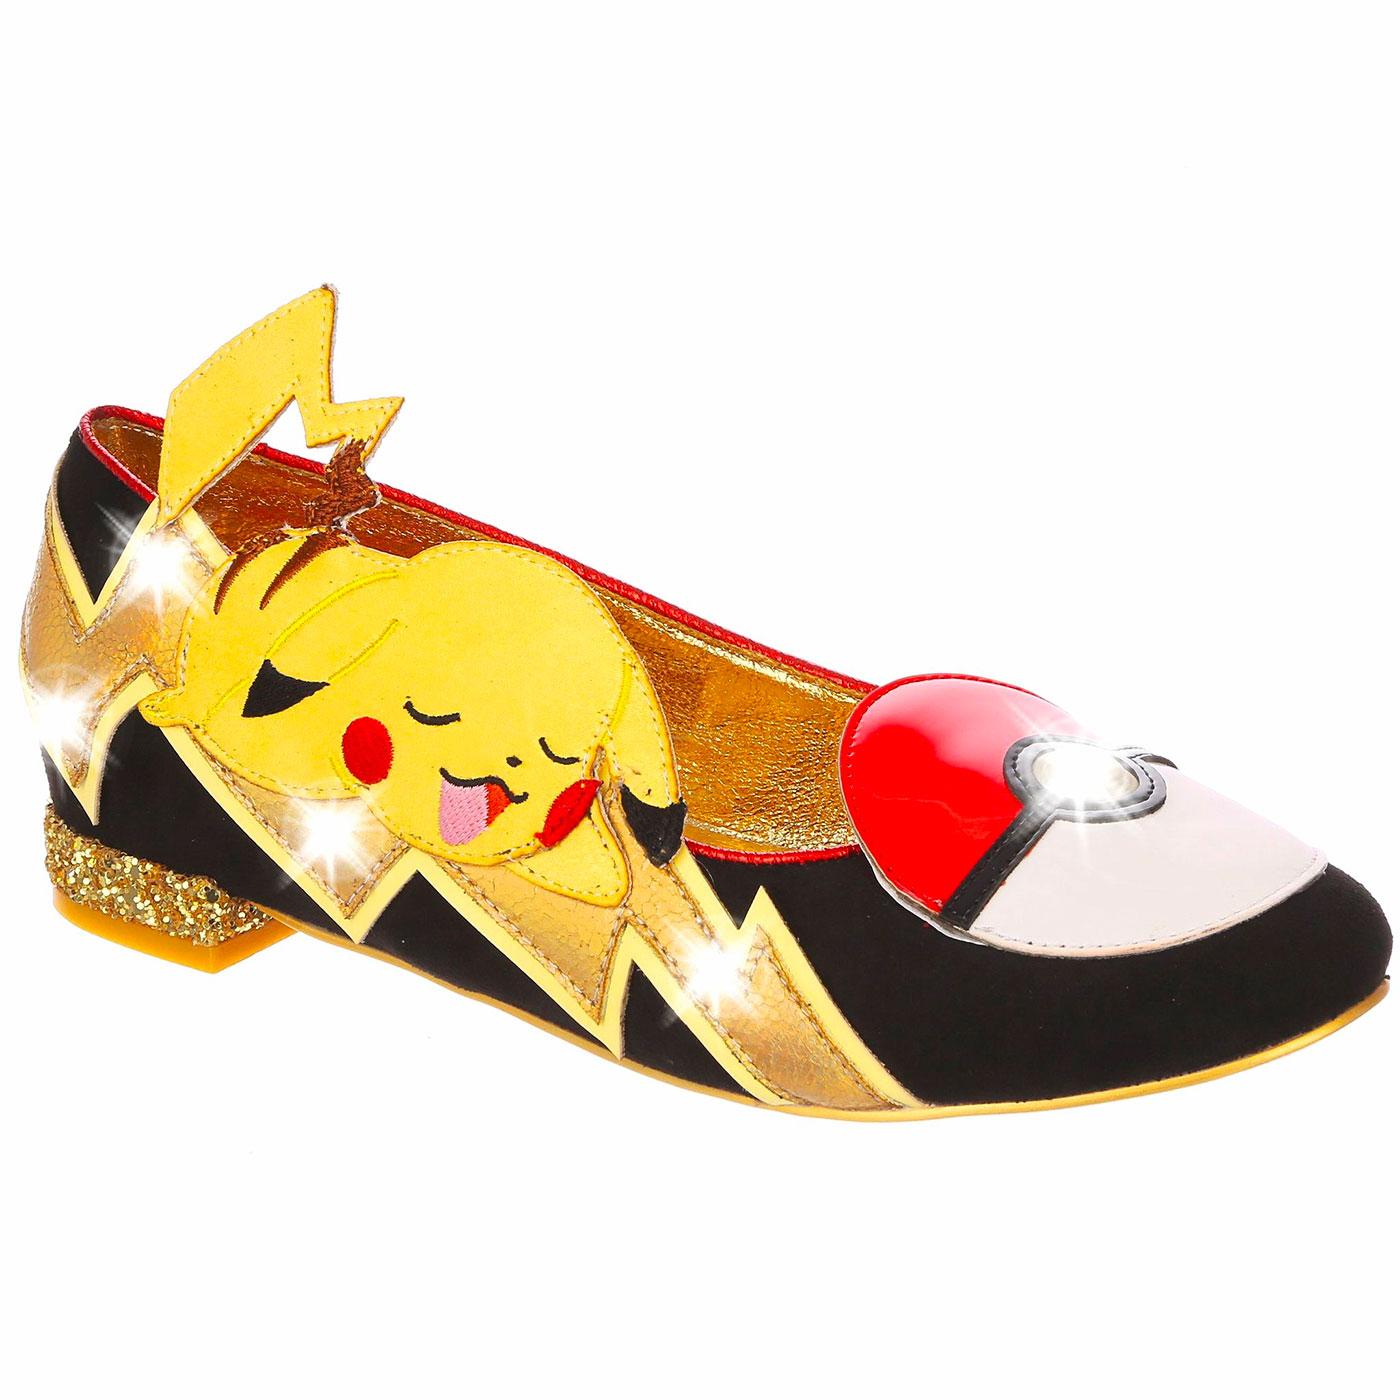 Pikachu Dreams IRREGULAR CHOICE Pokemon Flat Shoes